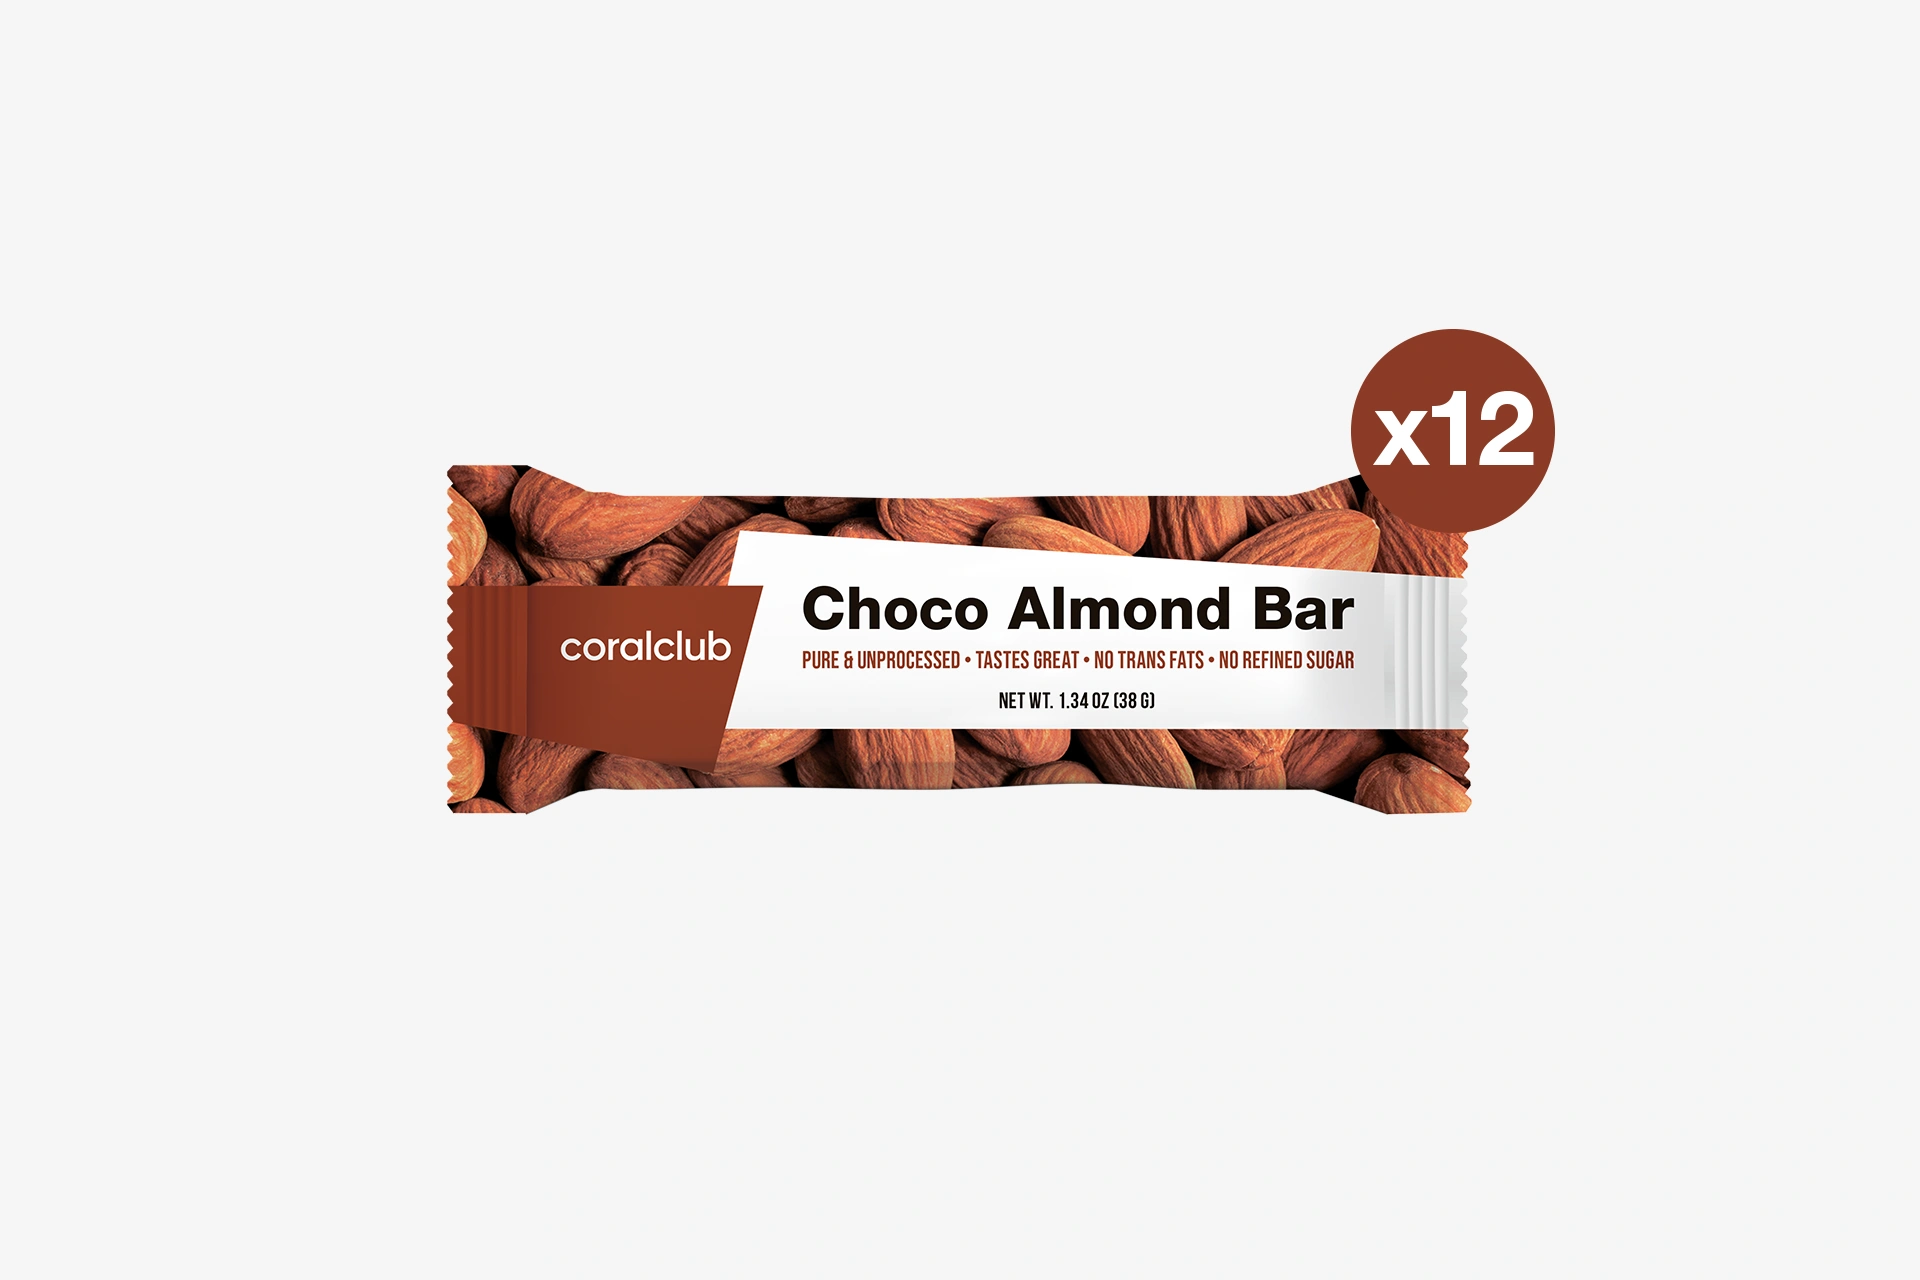 Choco Almond Bar